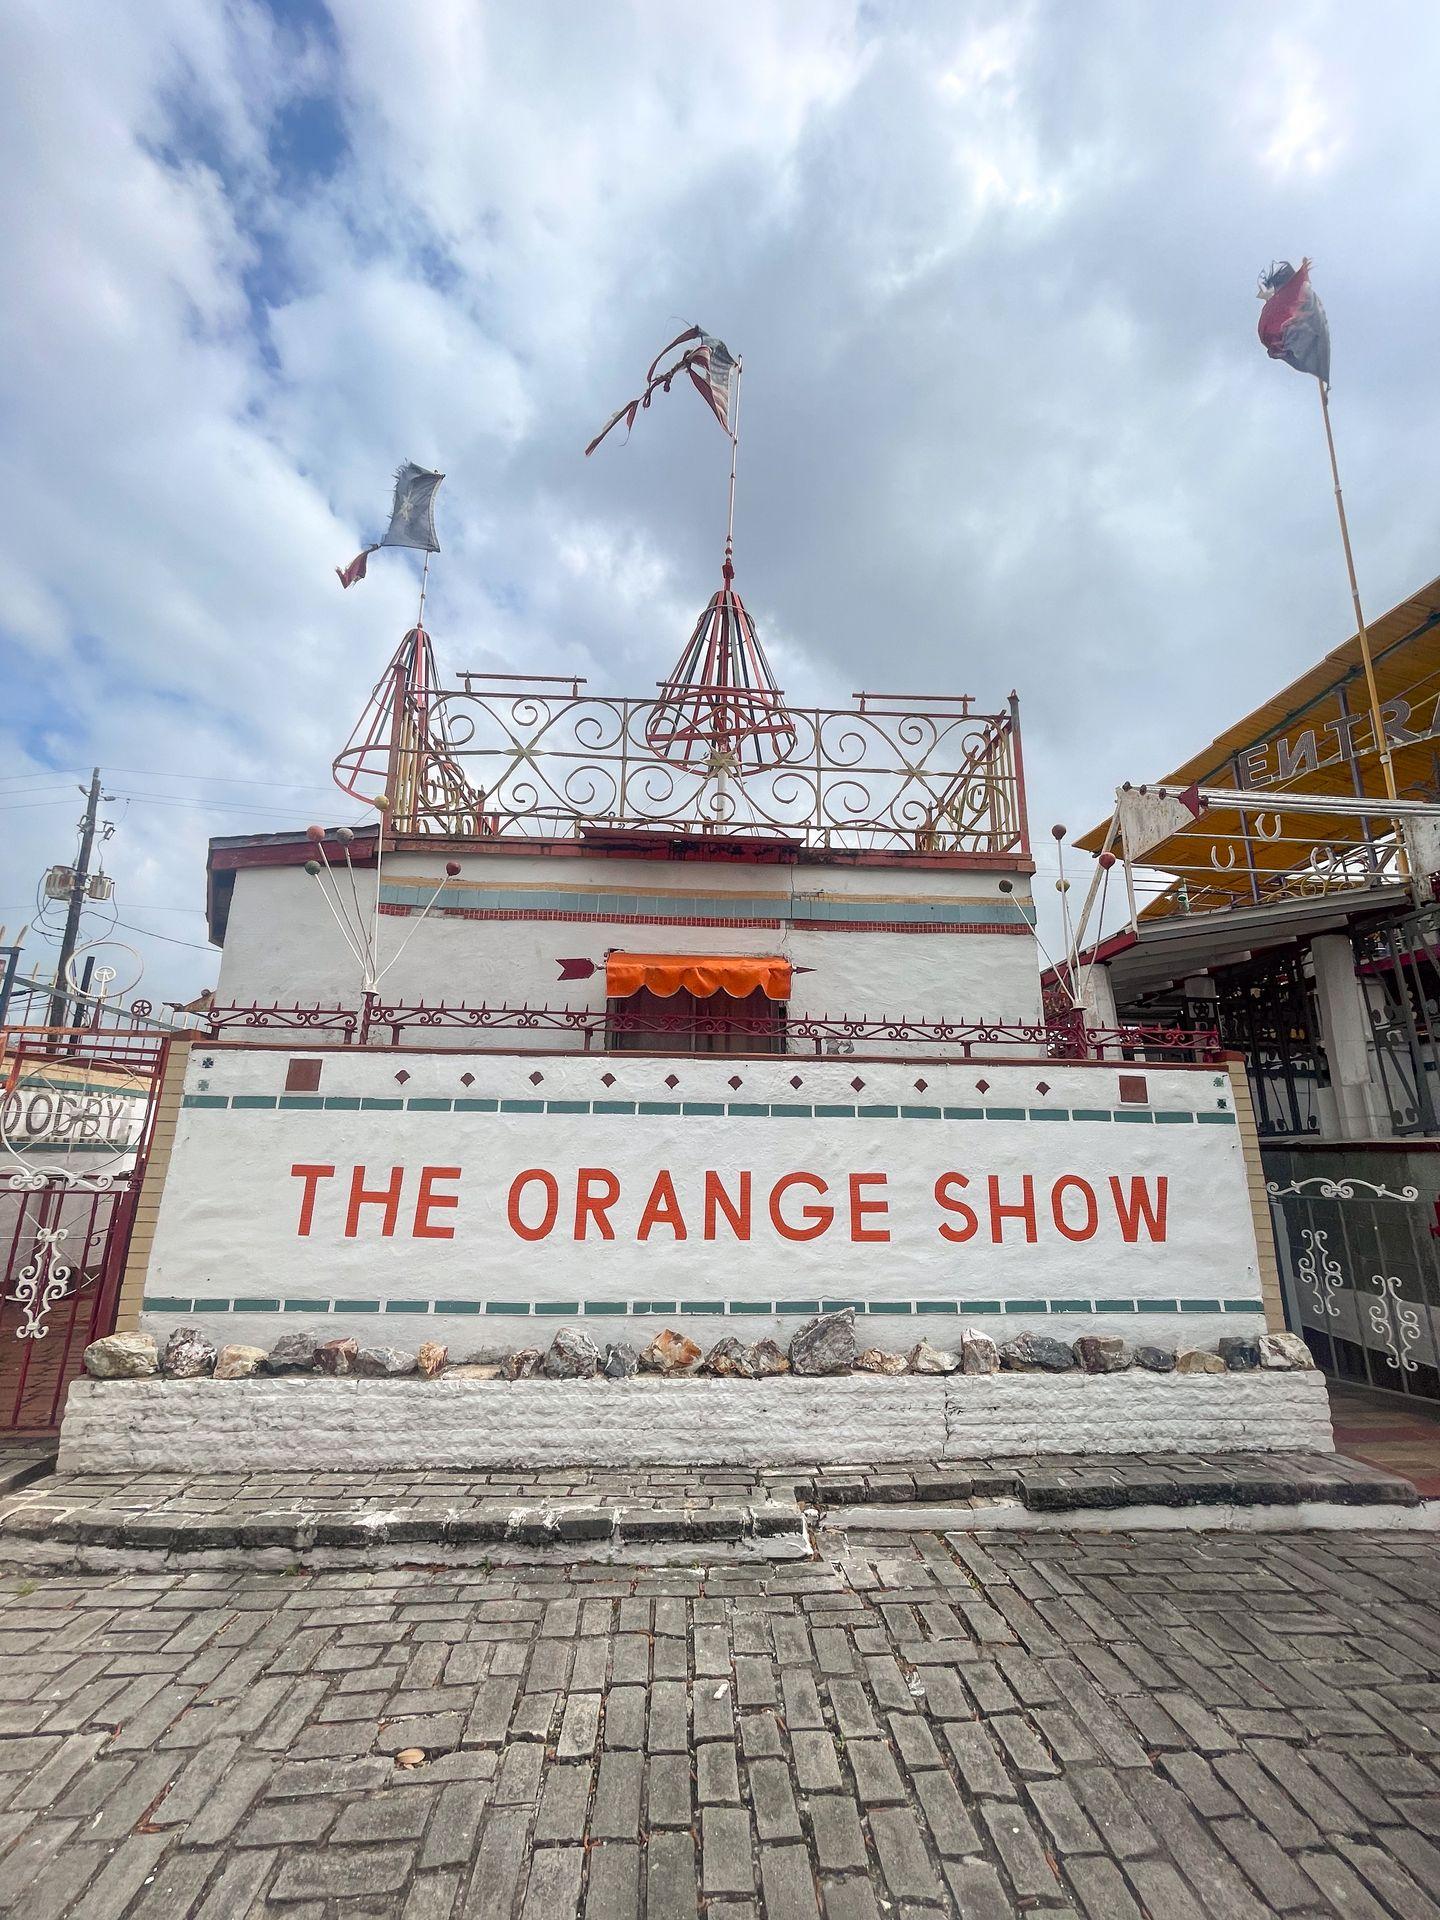 The exterior of The Orange Show Monument.